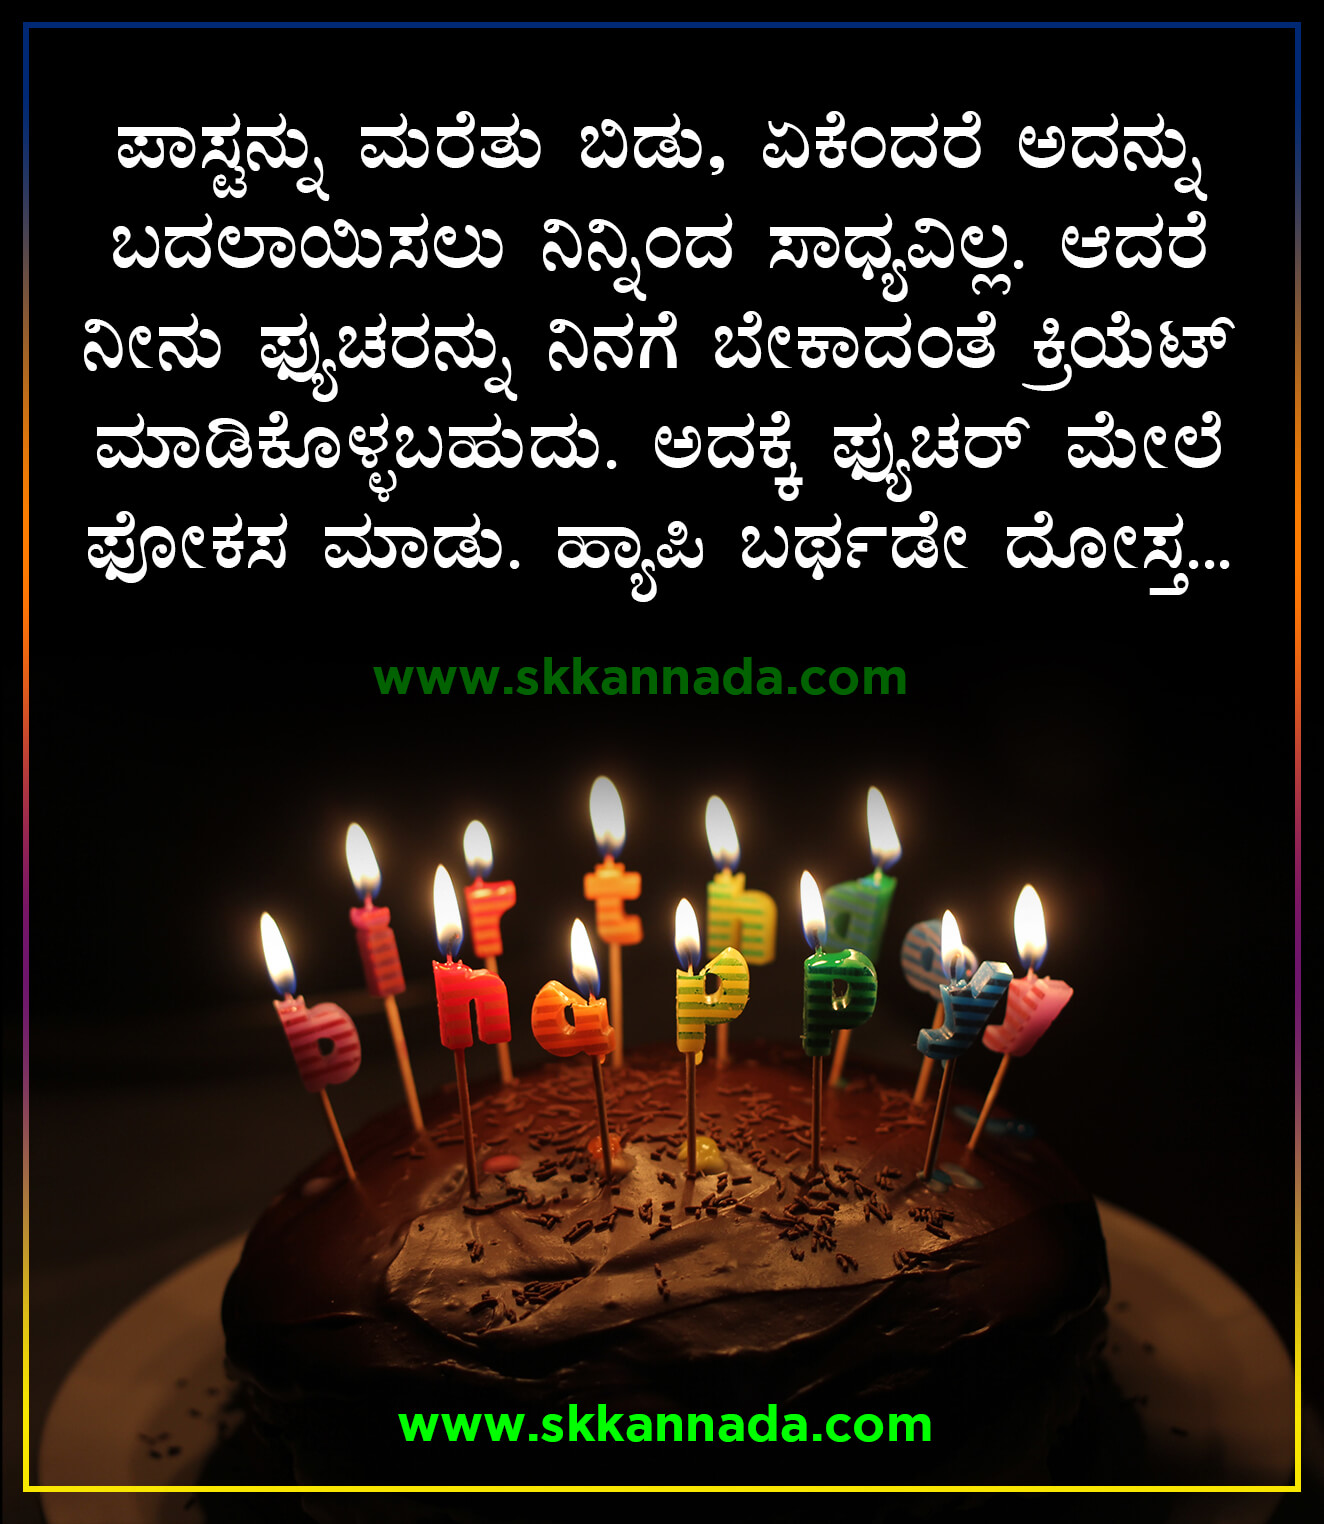 Happy Birthday Wishes in Kannada